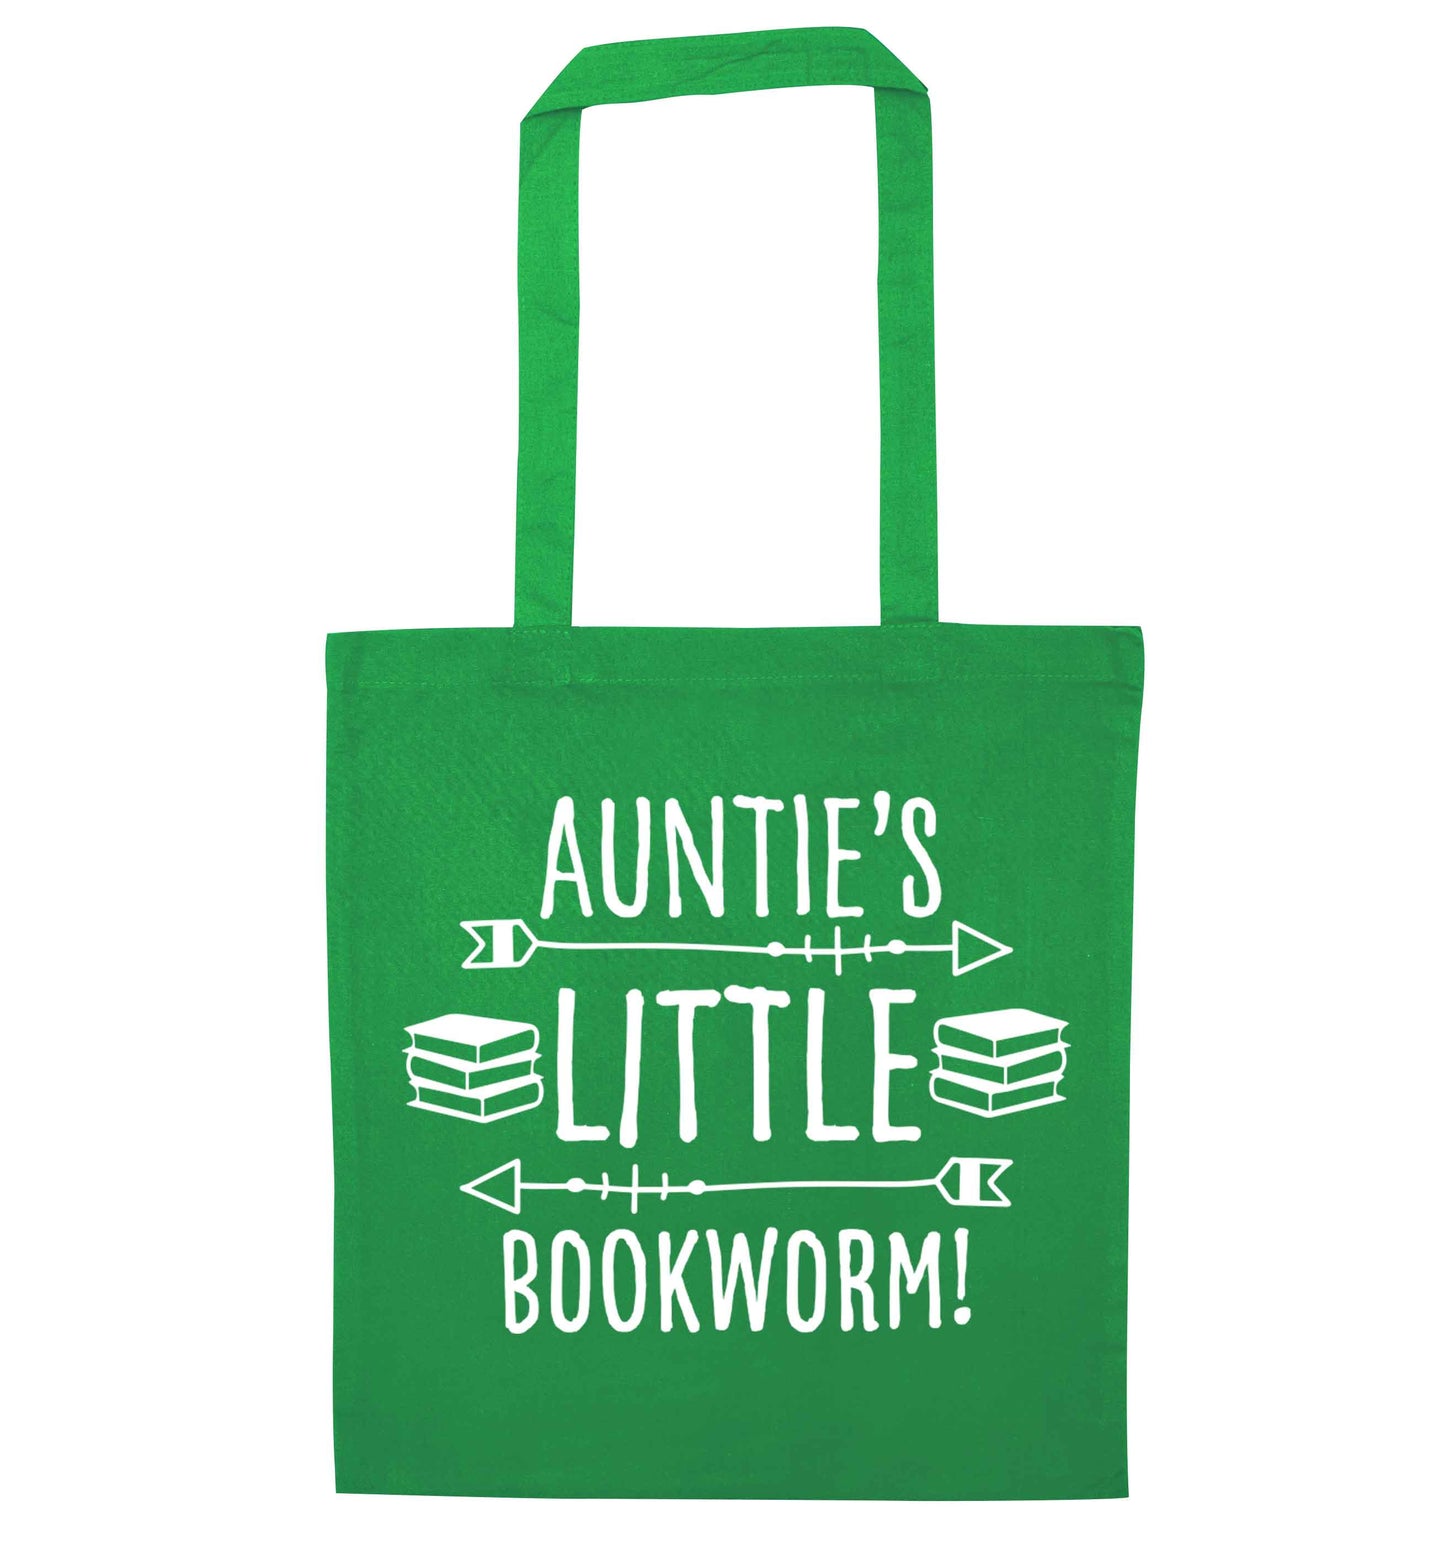 Auntie's little bookworm green tote bag